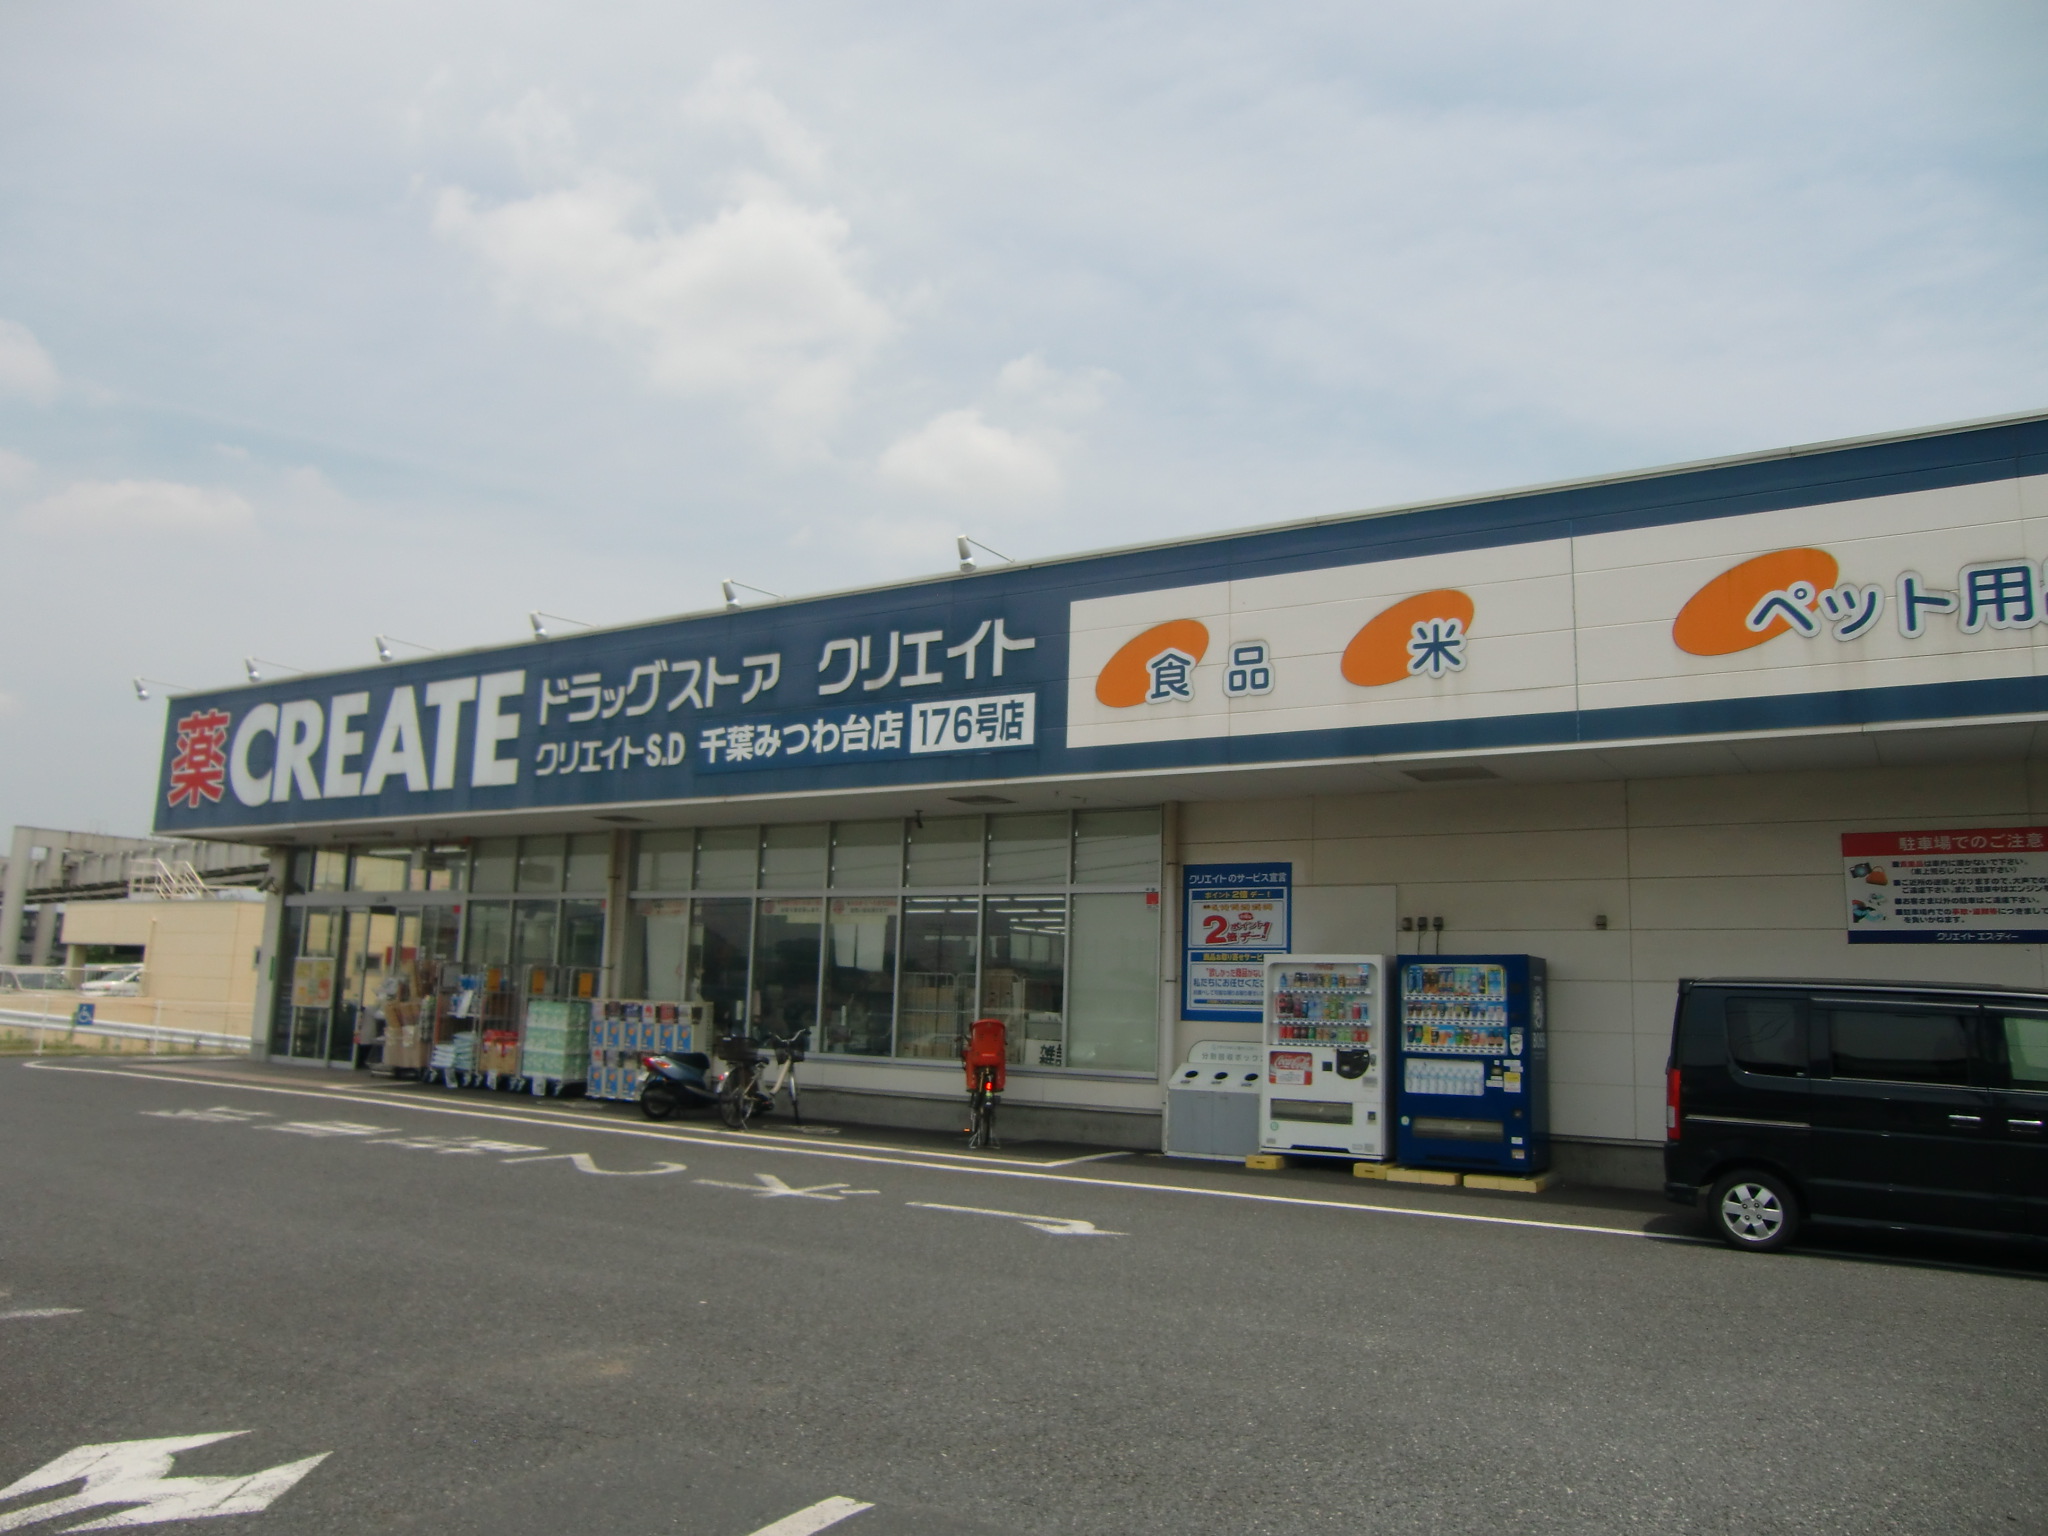 Dorakkusutoa. Create es ・ Dee Chiba Mitsuwadai shop 202m until (drugstore)